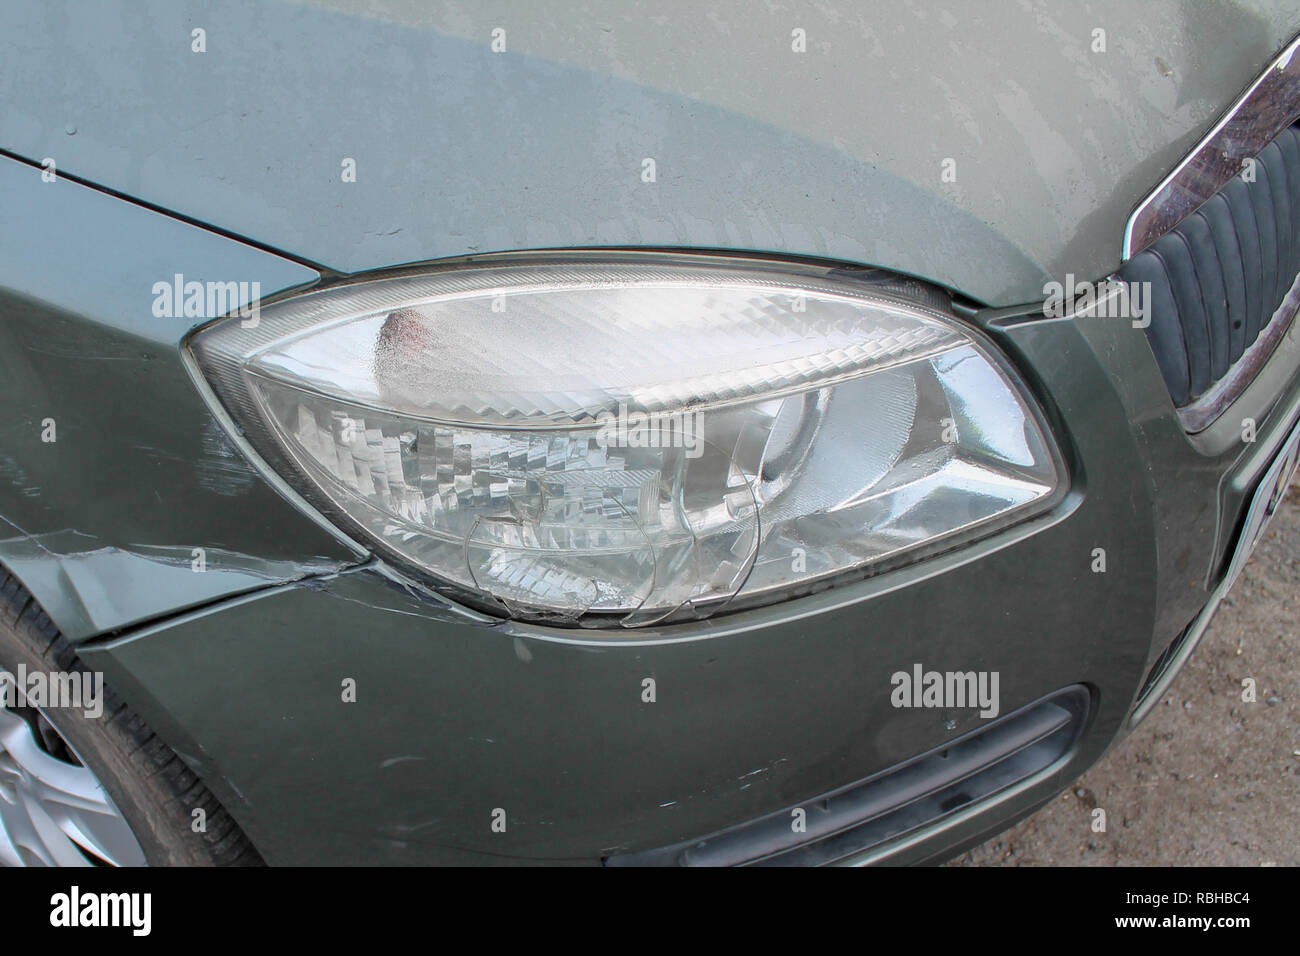 Car Crash; Body work and headlight damage after a vehicle / auto crash. Stock Photo